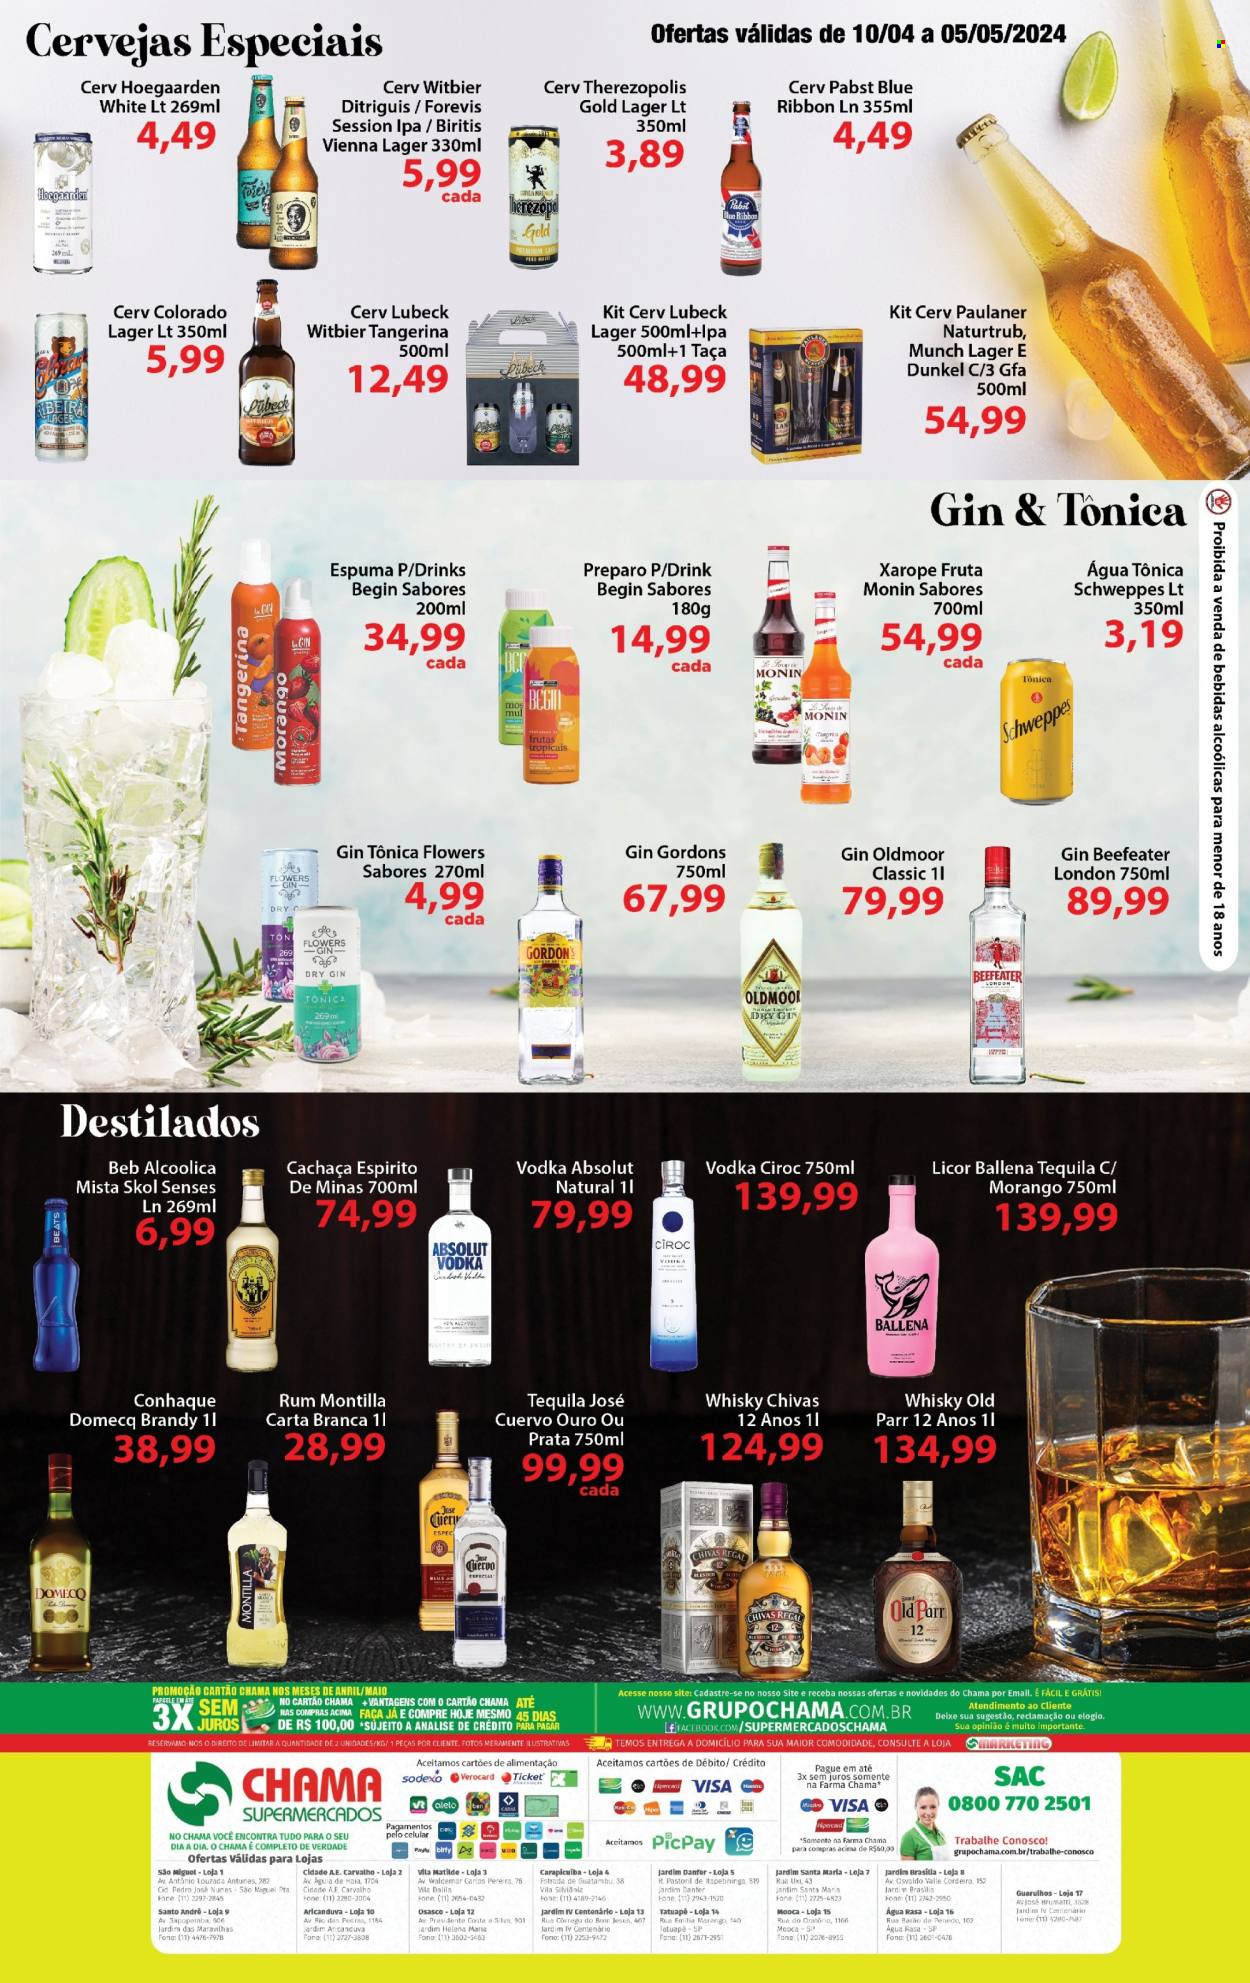 thumbnail - Folheto Chama Supermercados - 10/04/2024 - 05/05/2024 - Produtos em promoção - Hoegaarden, Skol, cerveja, bebida alcoólica, cordeiro, xarope, Schweppes, água tónica, Absolut Vodka, Beefeater, Cognac, gin, vodka, whiskey, tequila, scotch whisky, rum, brandy, Cachaça, liqueur, Gordon’s, Chivas Regal. Página 2.